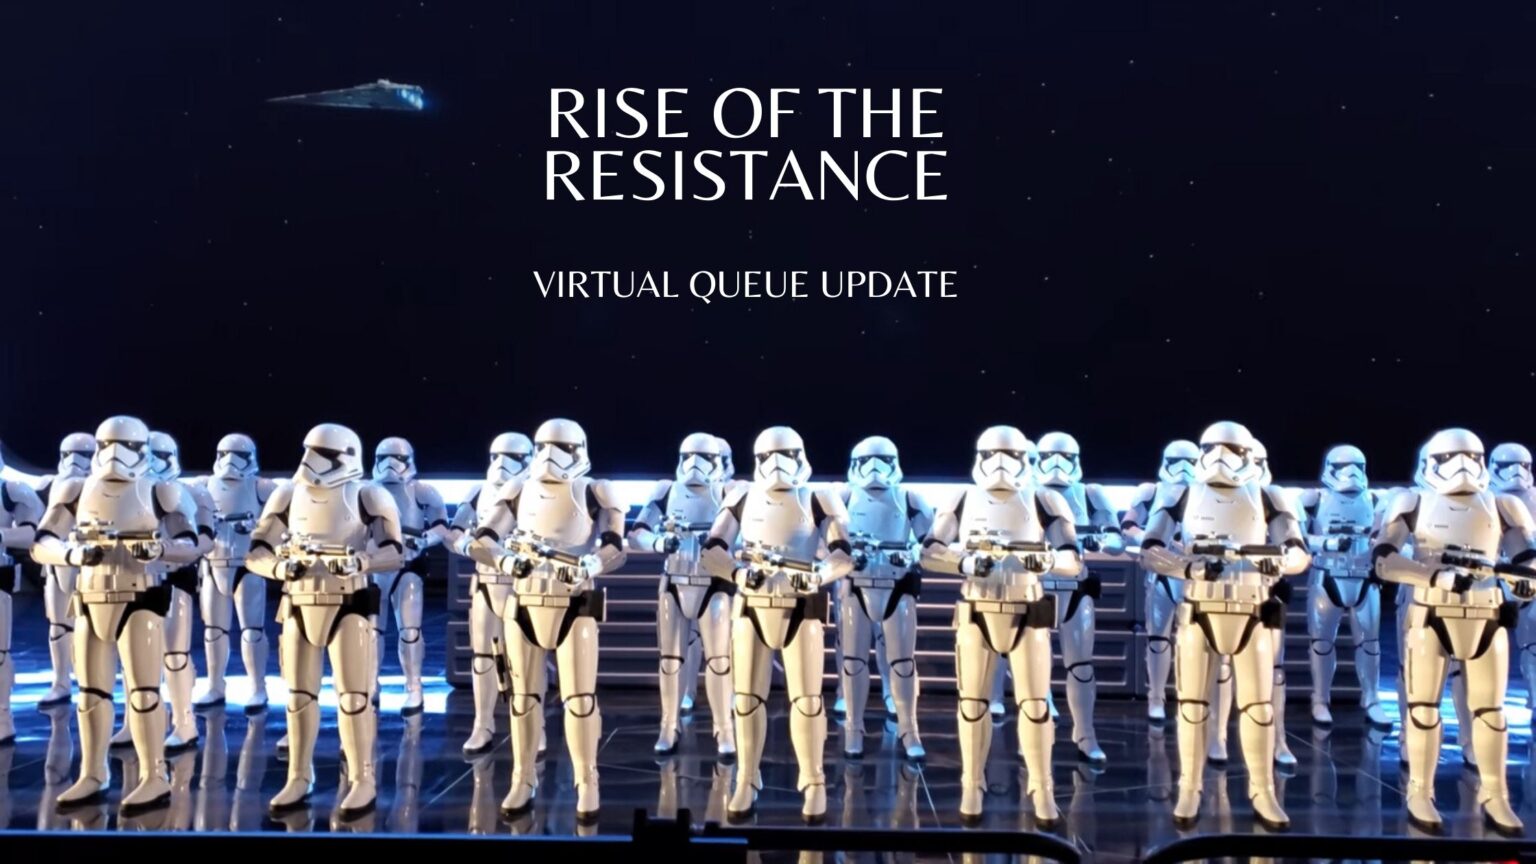 star wars rise of resistance virtual queue